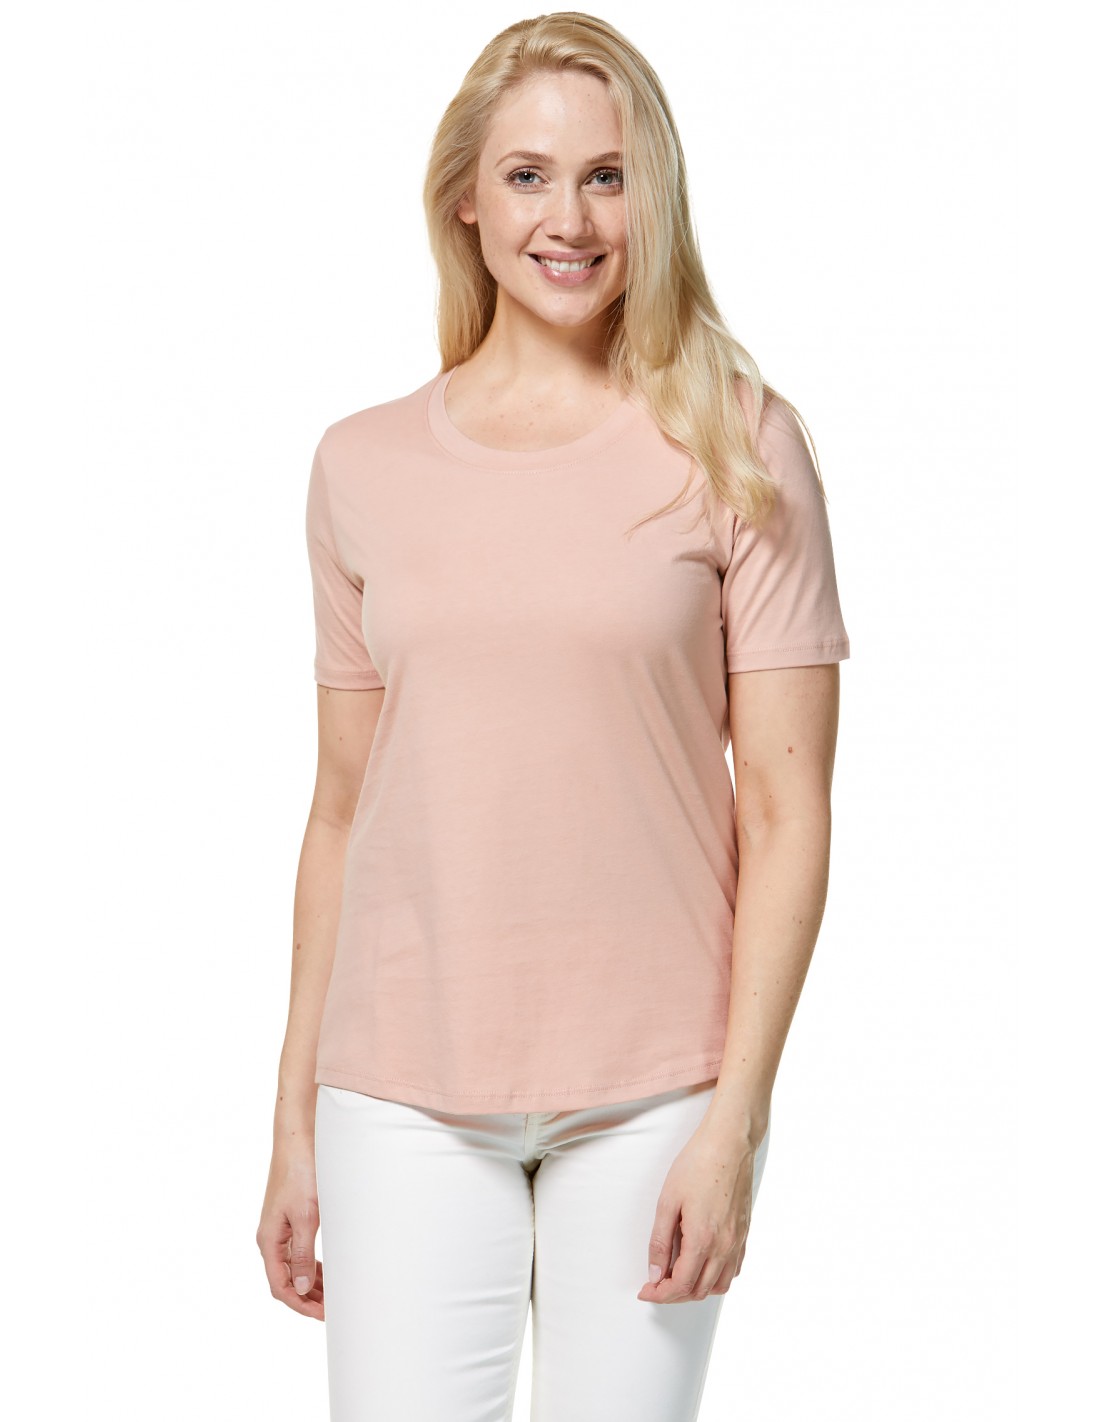 Organic Pima cotton short sleeve T-shirt for women